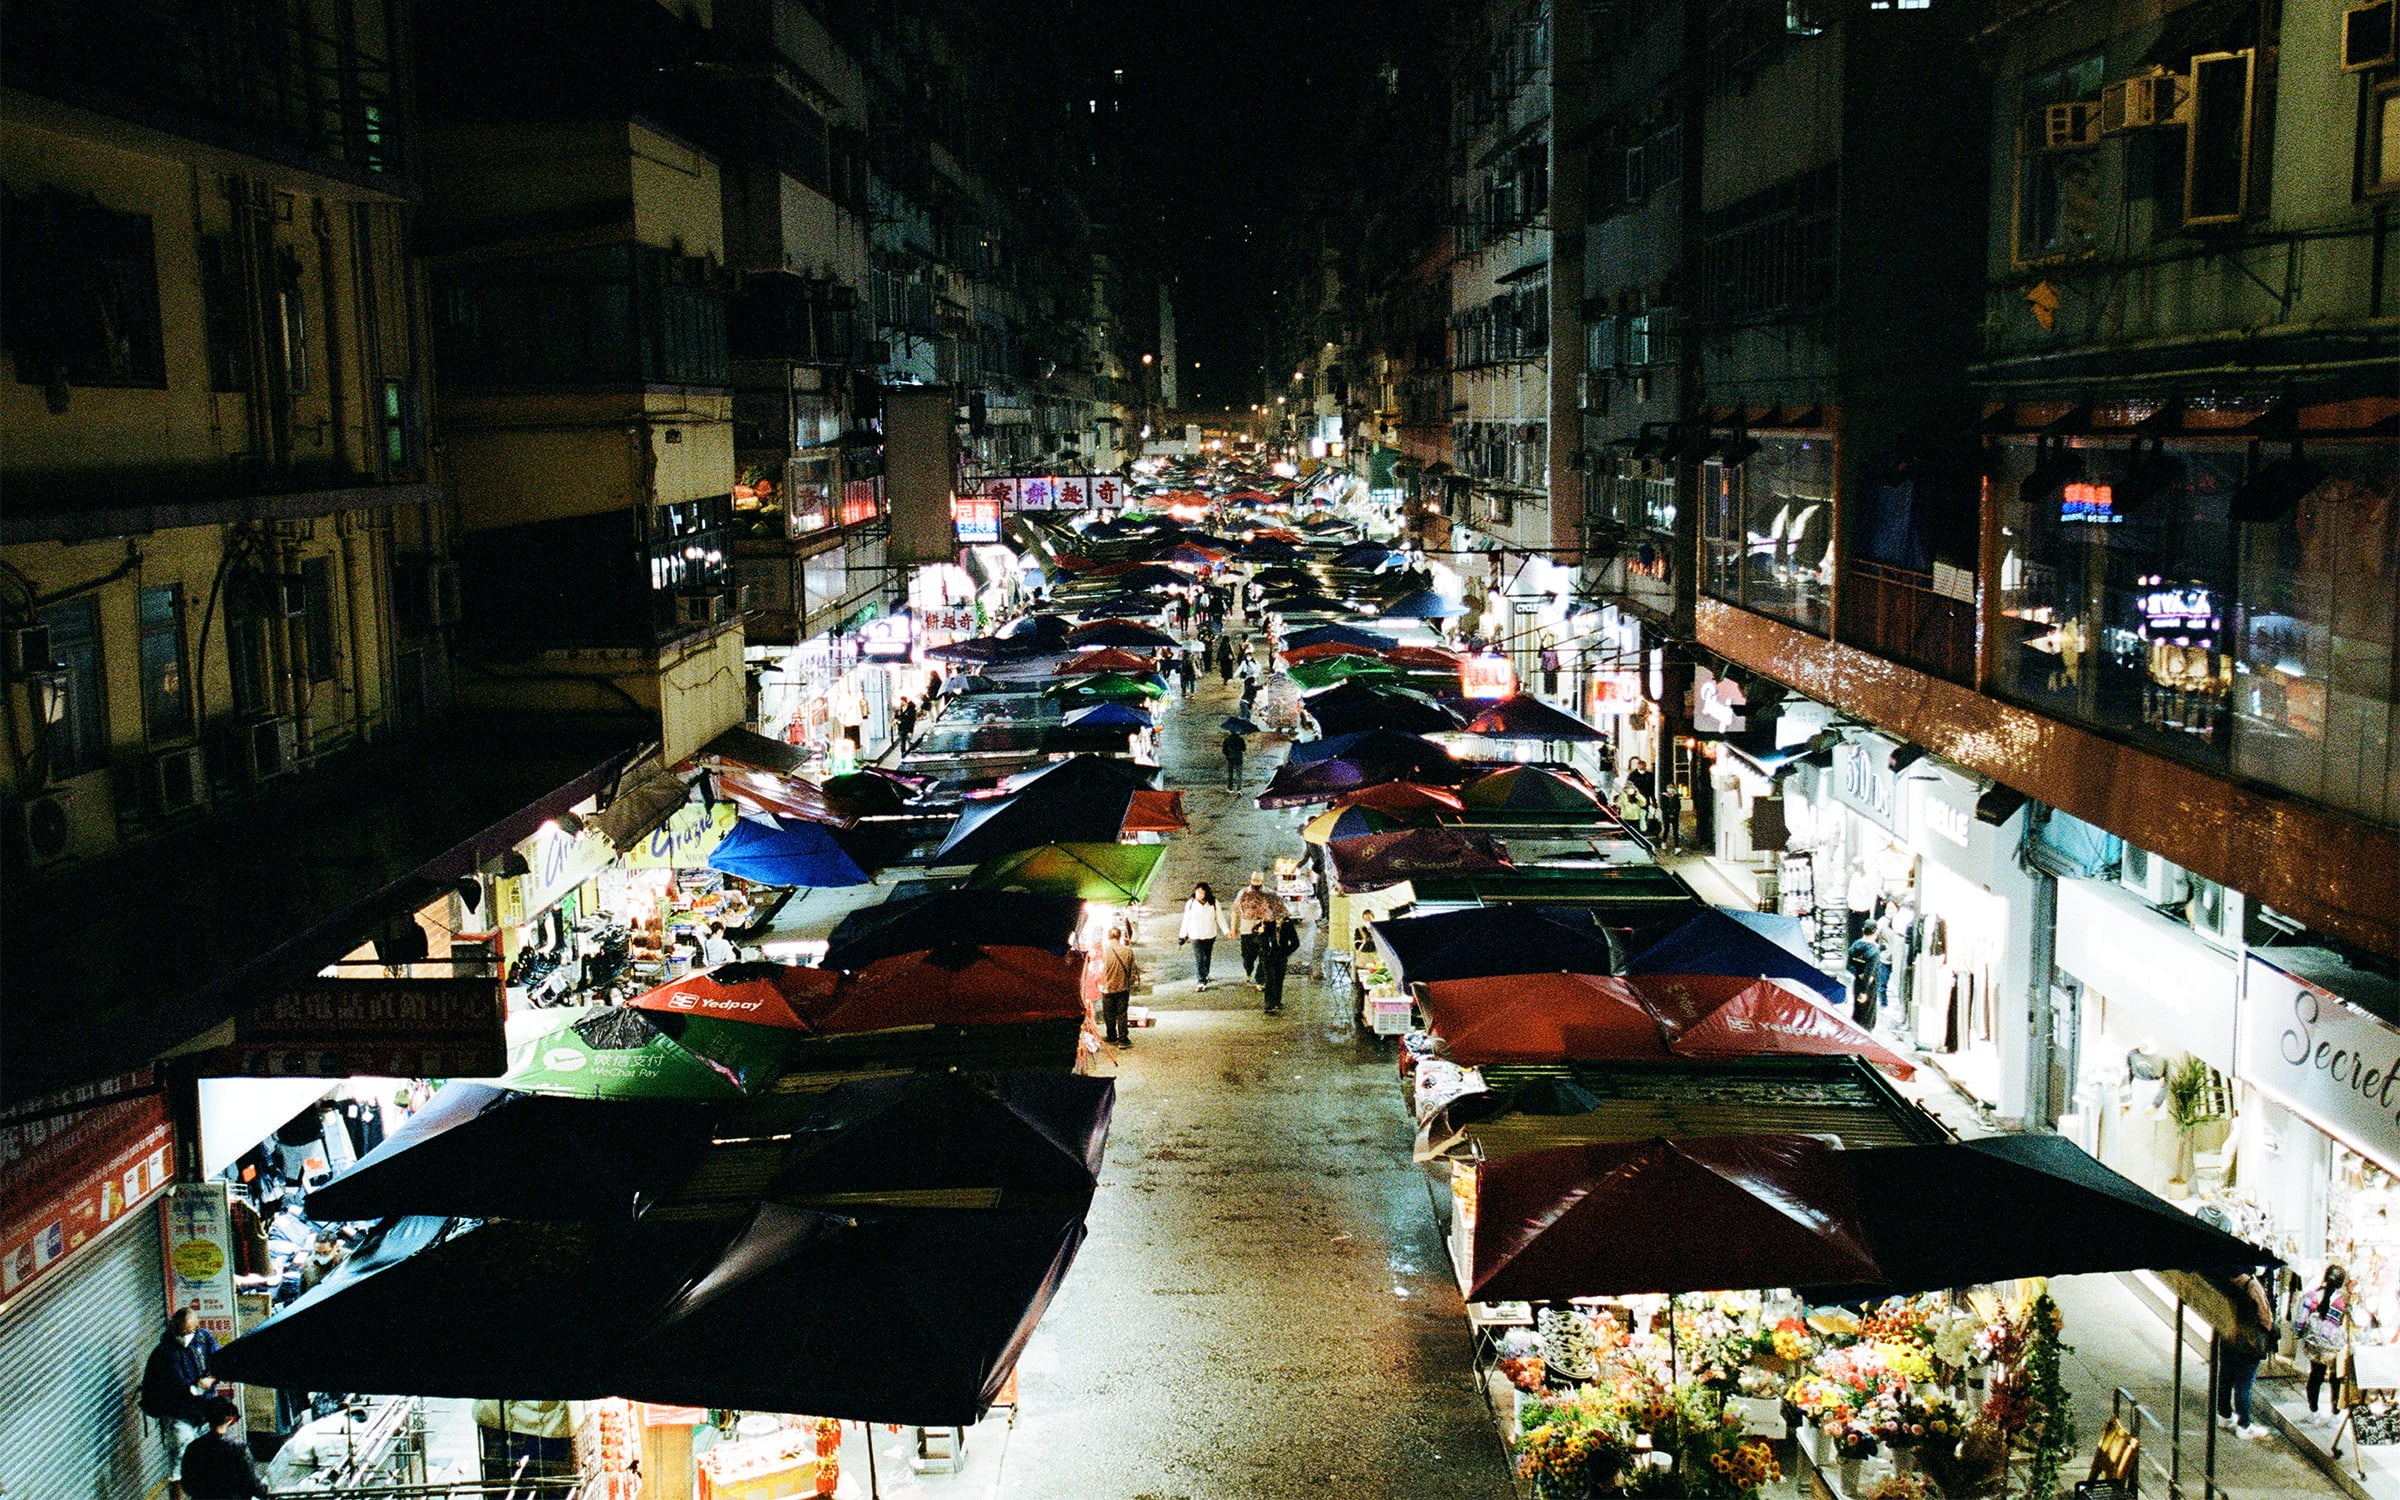 A night market scene in Kowloon. Photography by Luke Casey for Art Basel.